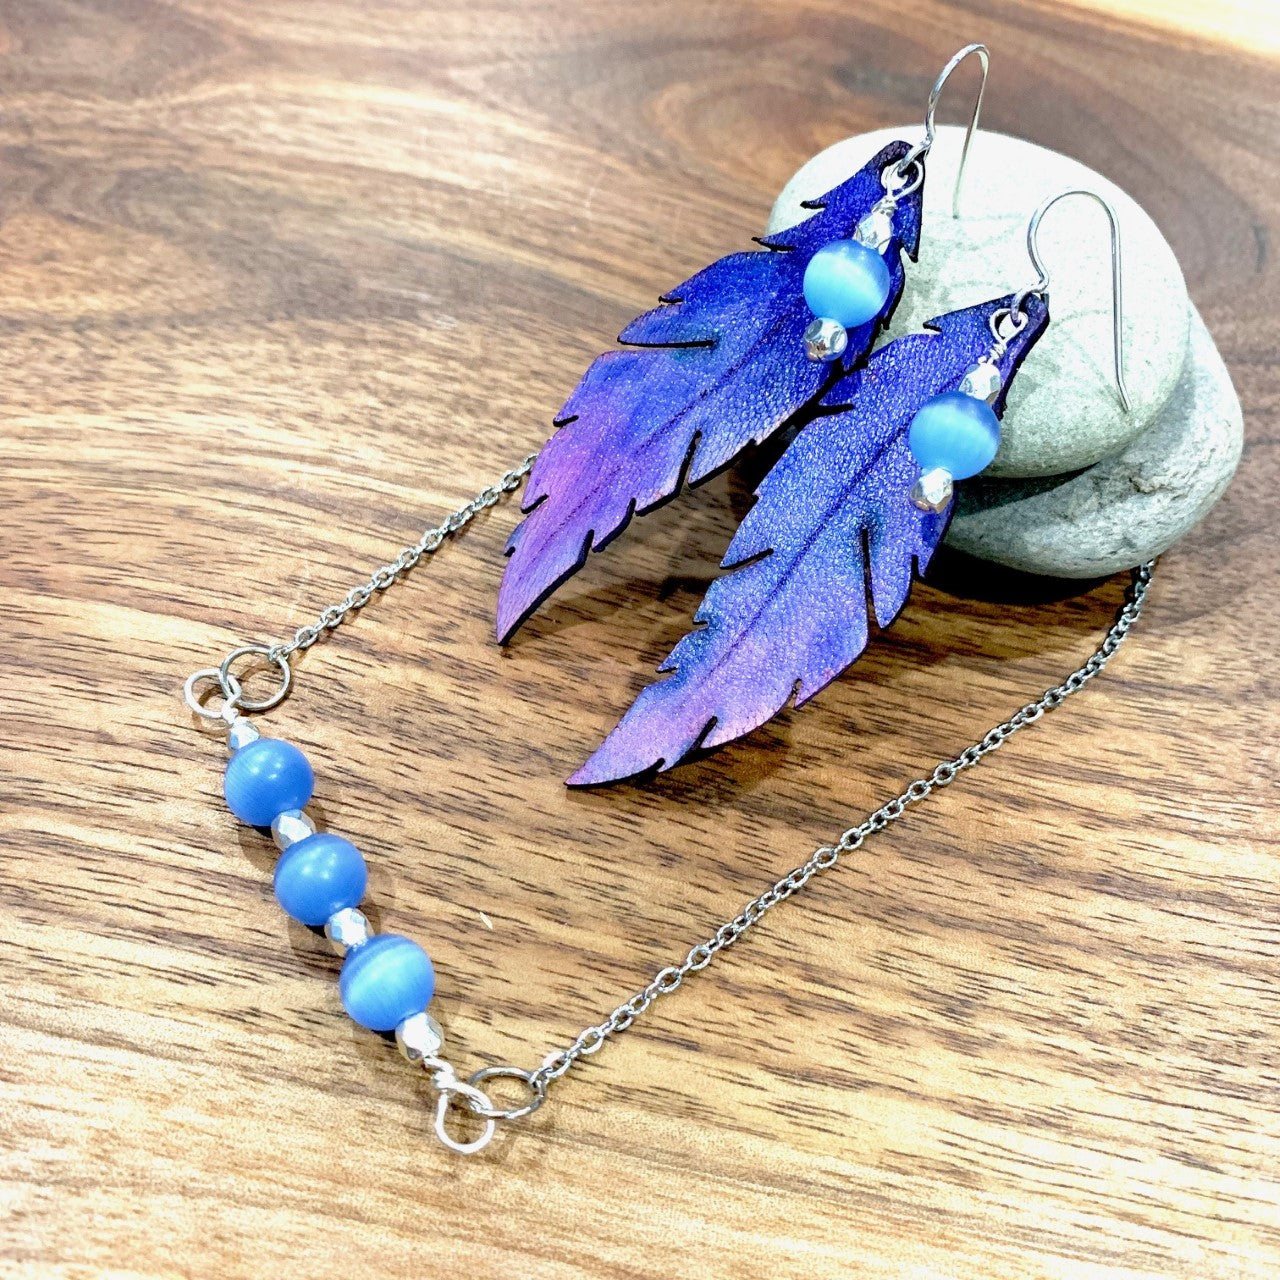 Blue catseye pendant and matching earrings